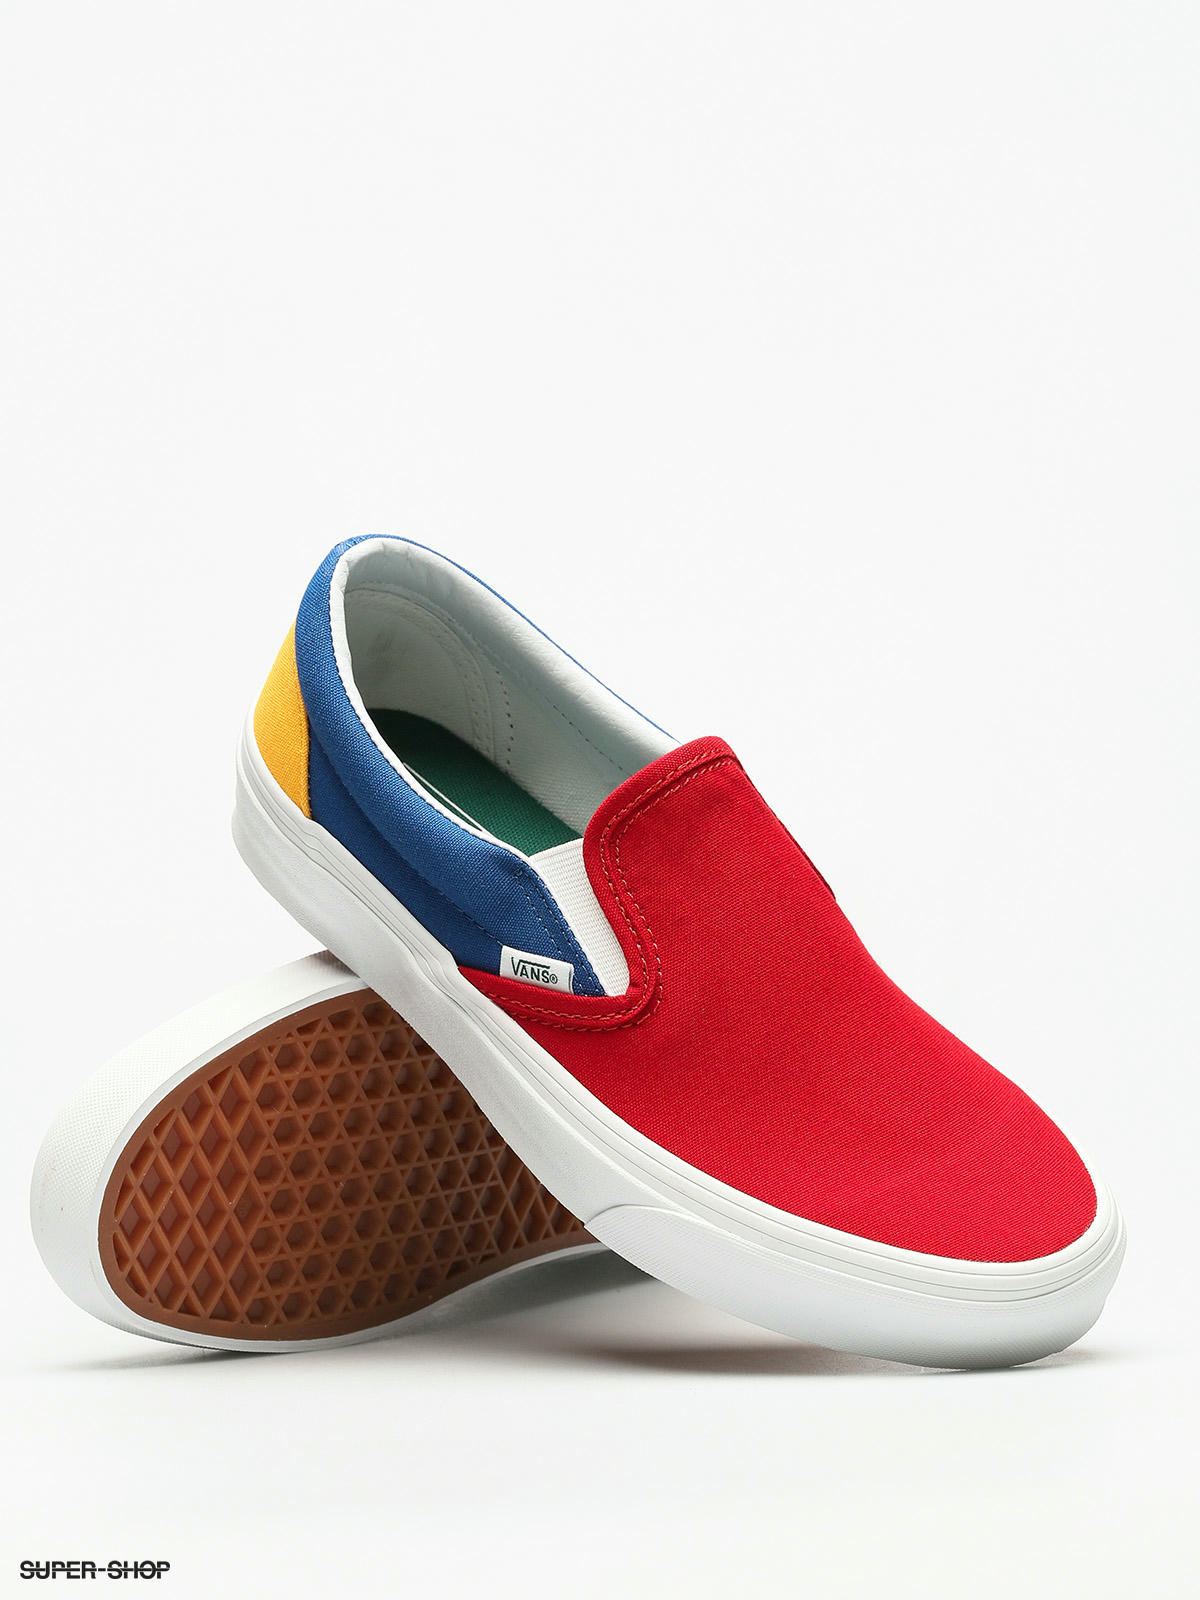 Colonial Haiku Vandret Vans Shoes Classic Slip On (vans/yacht/club/red/blue/yellow)